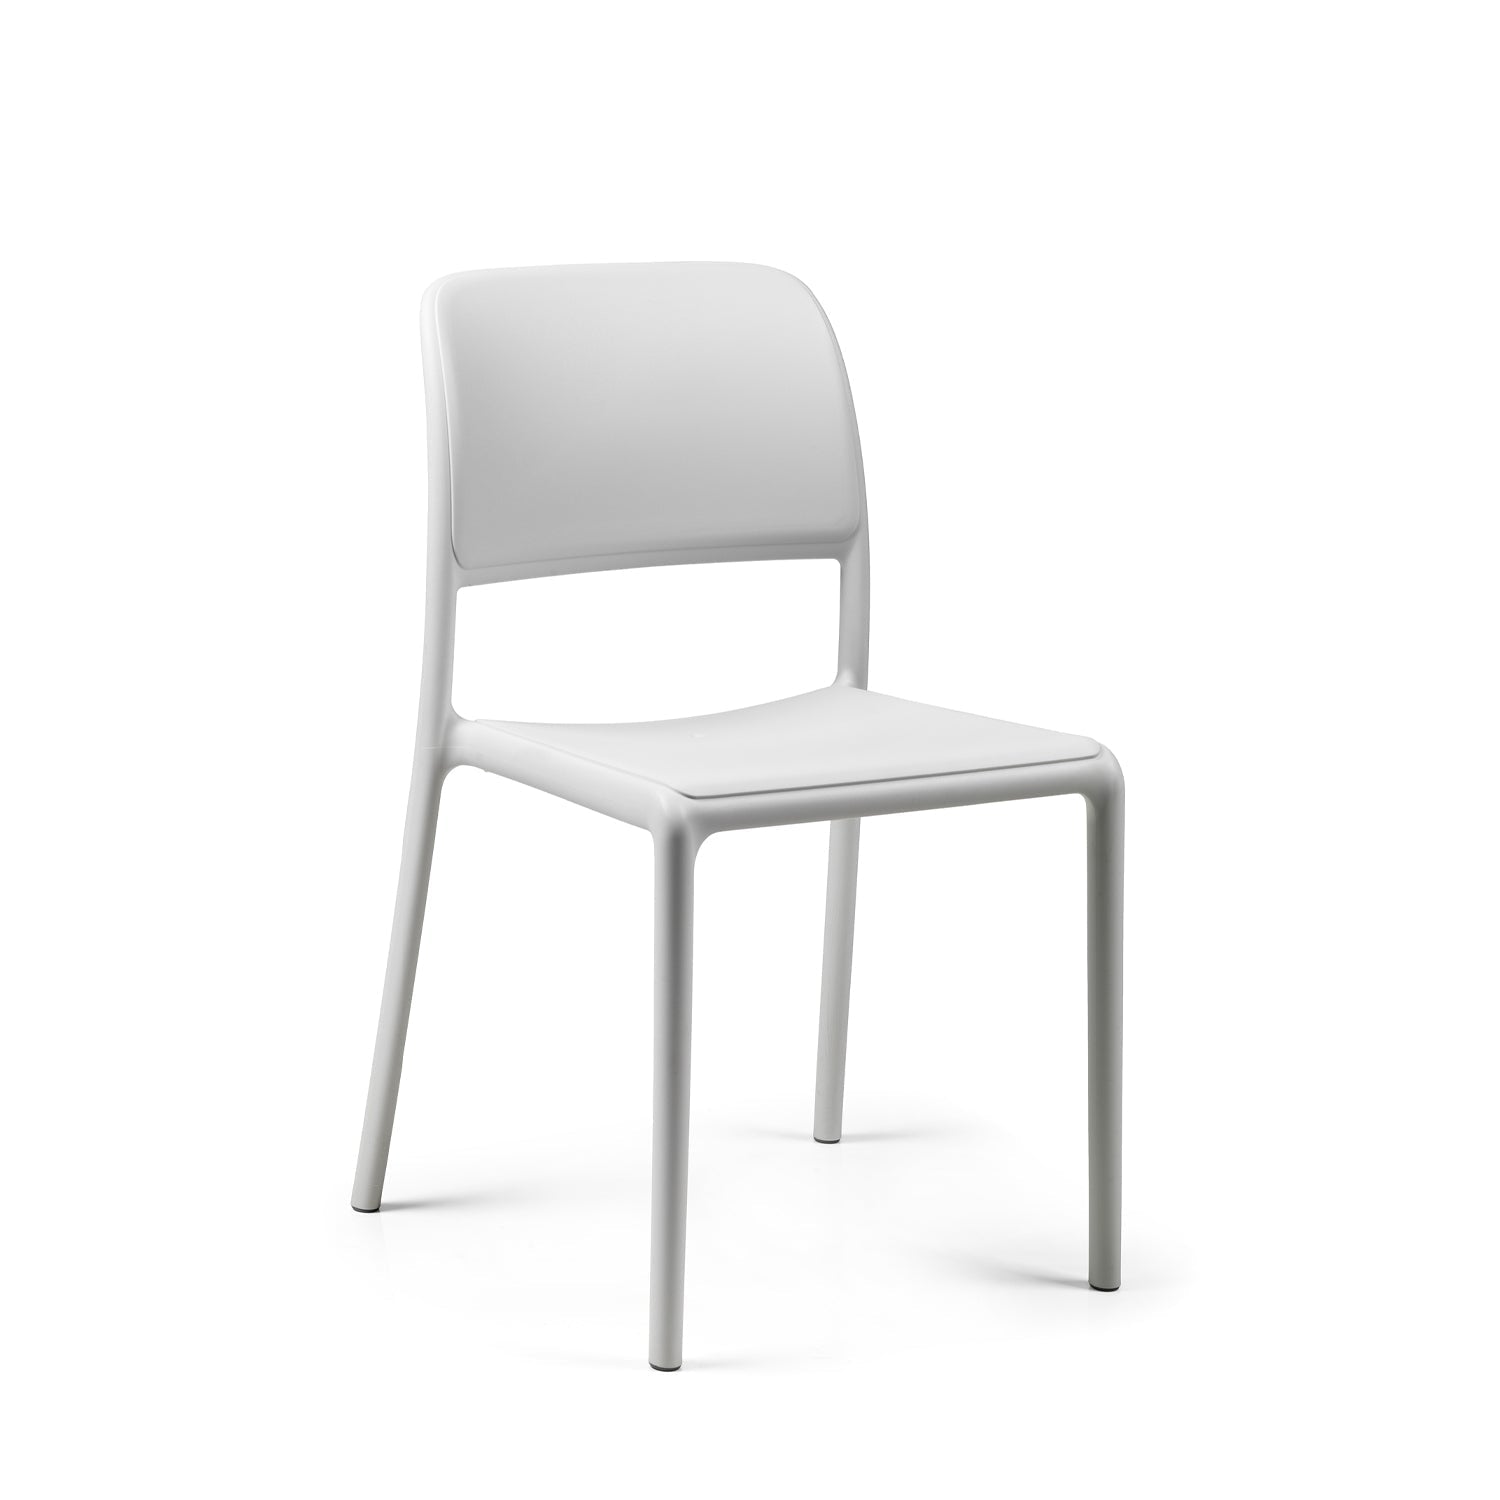 Riva Bistro Garden Chair By Nardi In White